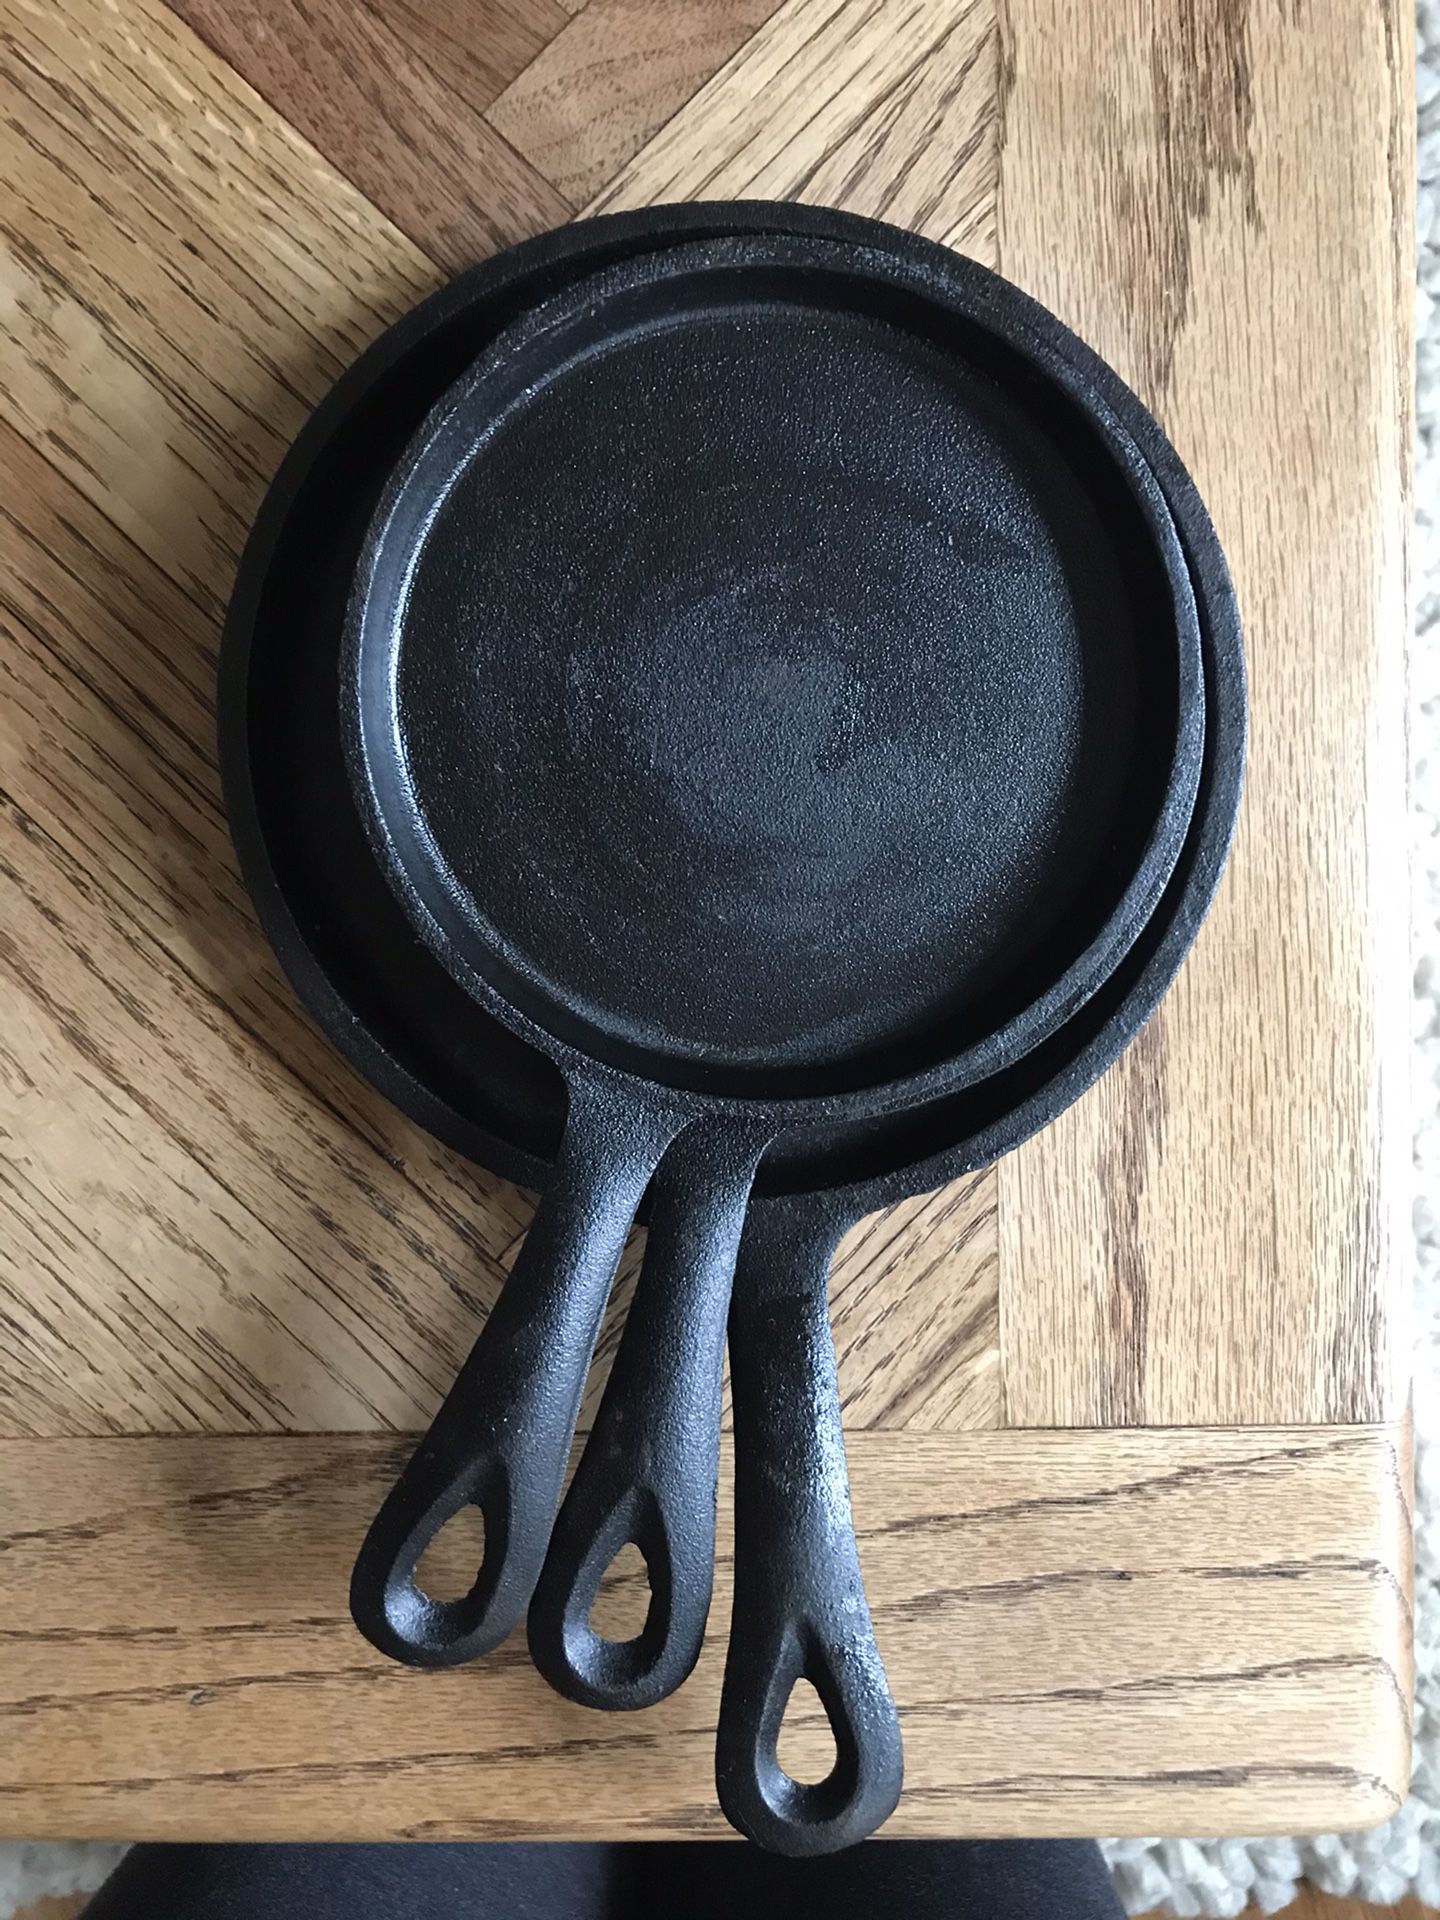 Set of three small cast iron pans